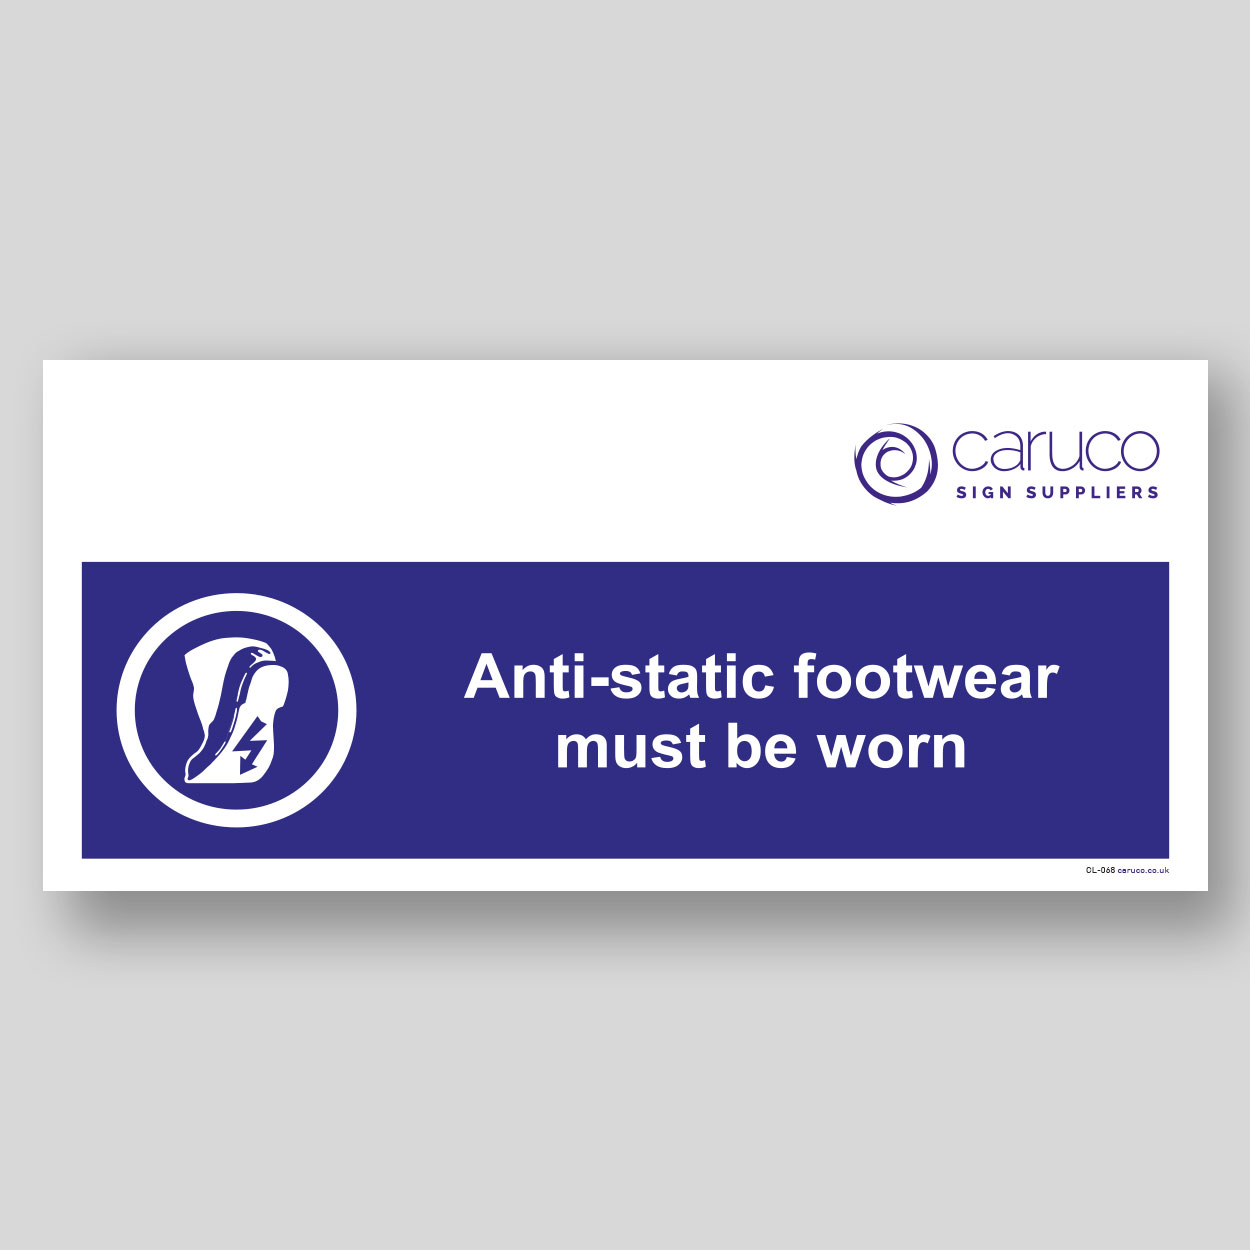 CL-068 Anti-static footwear